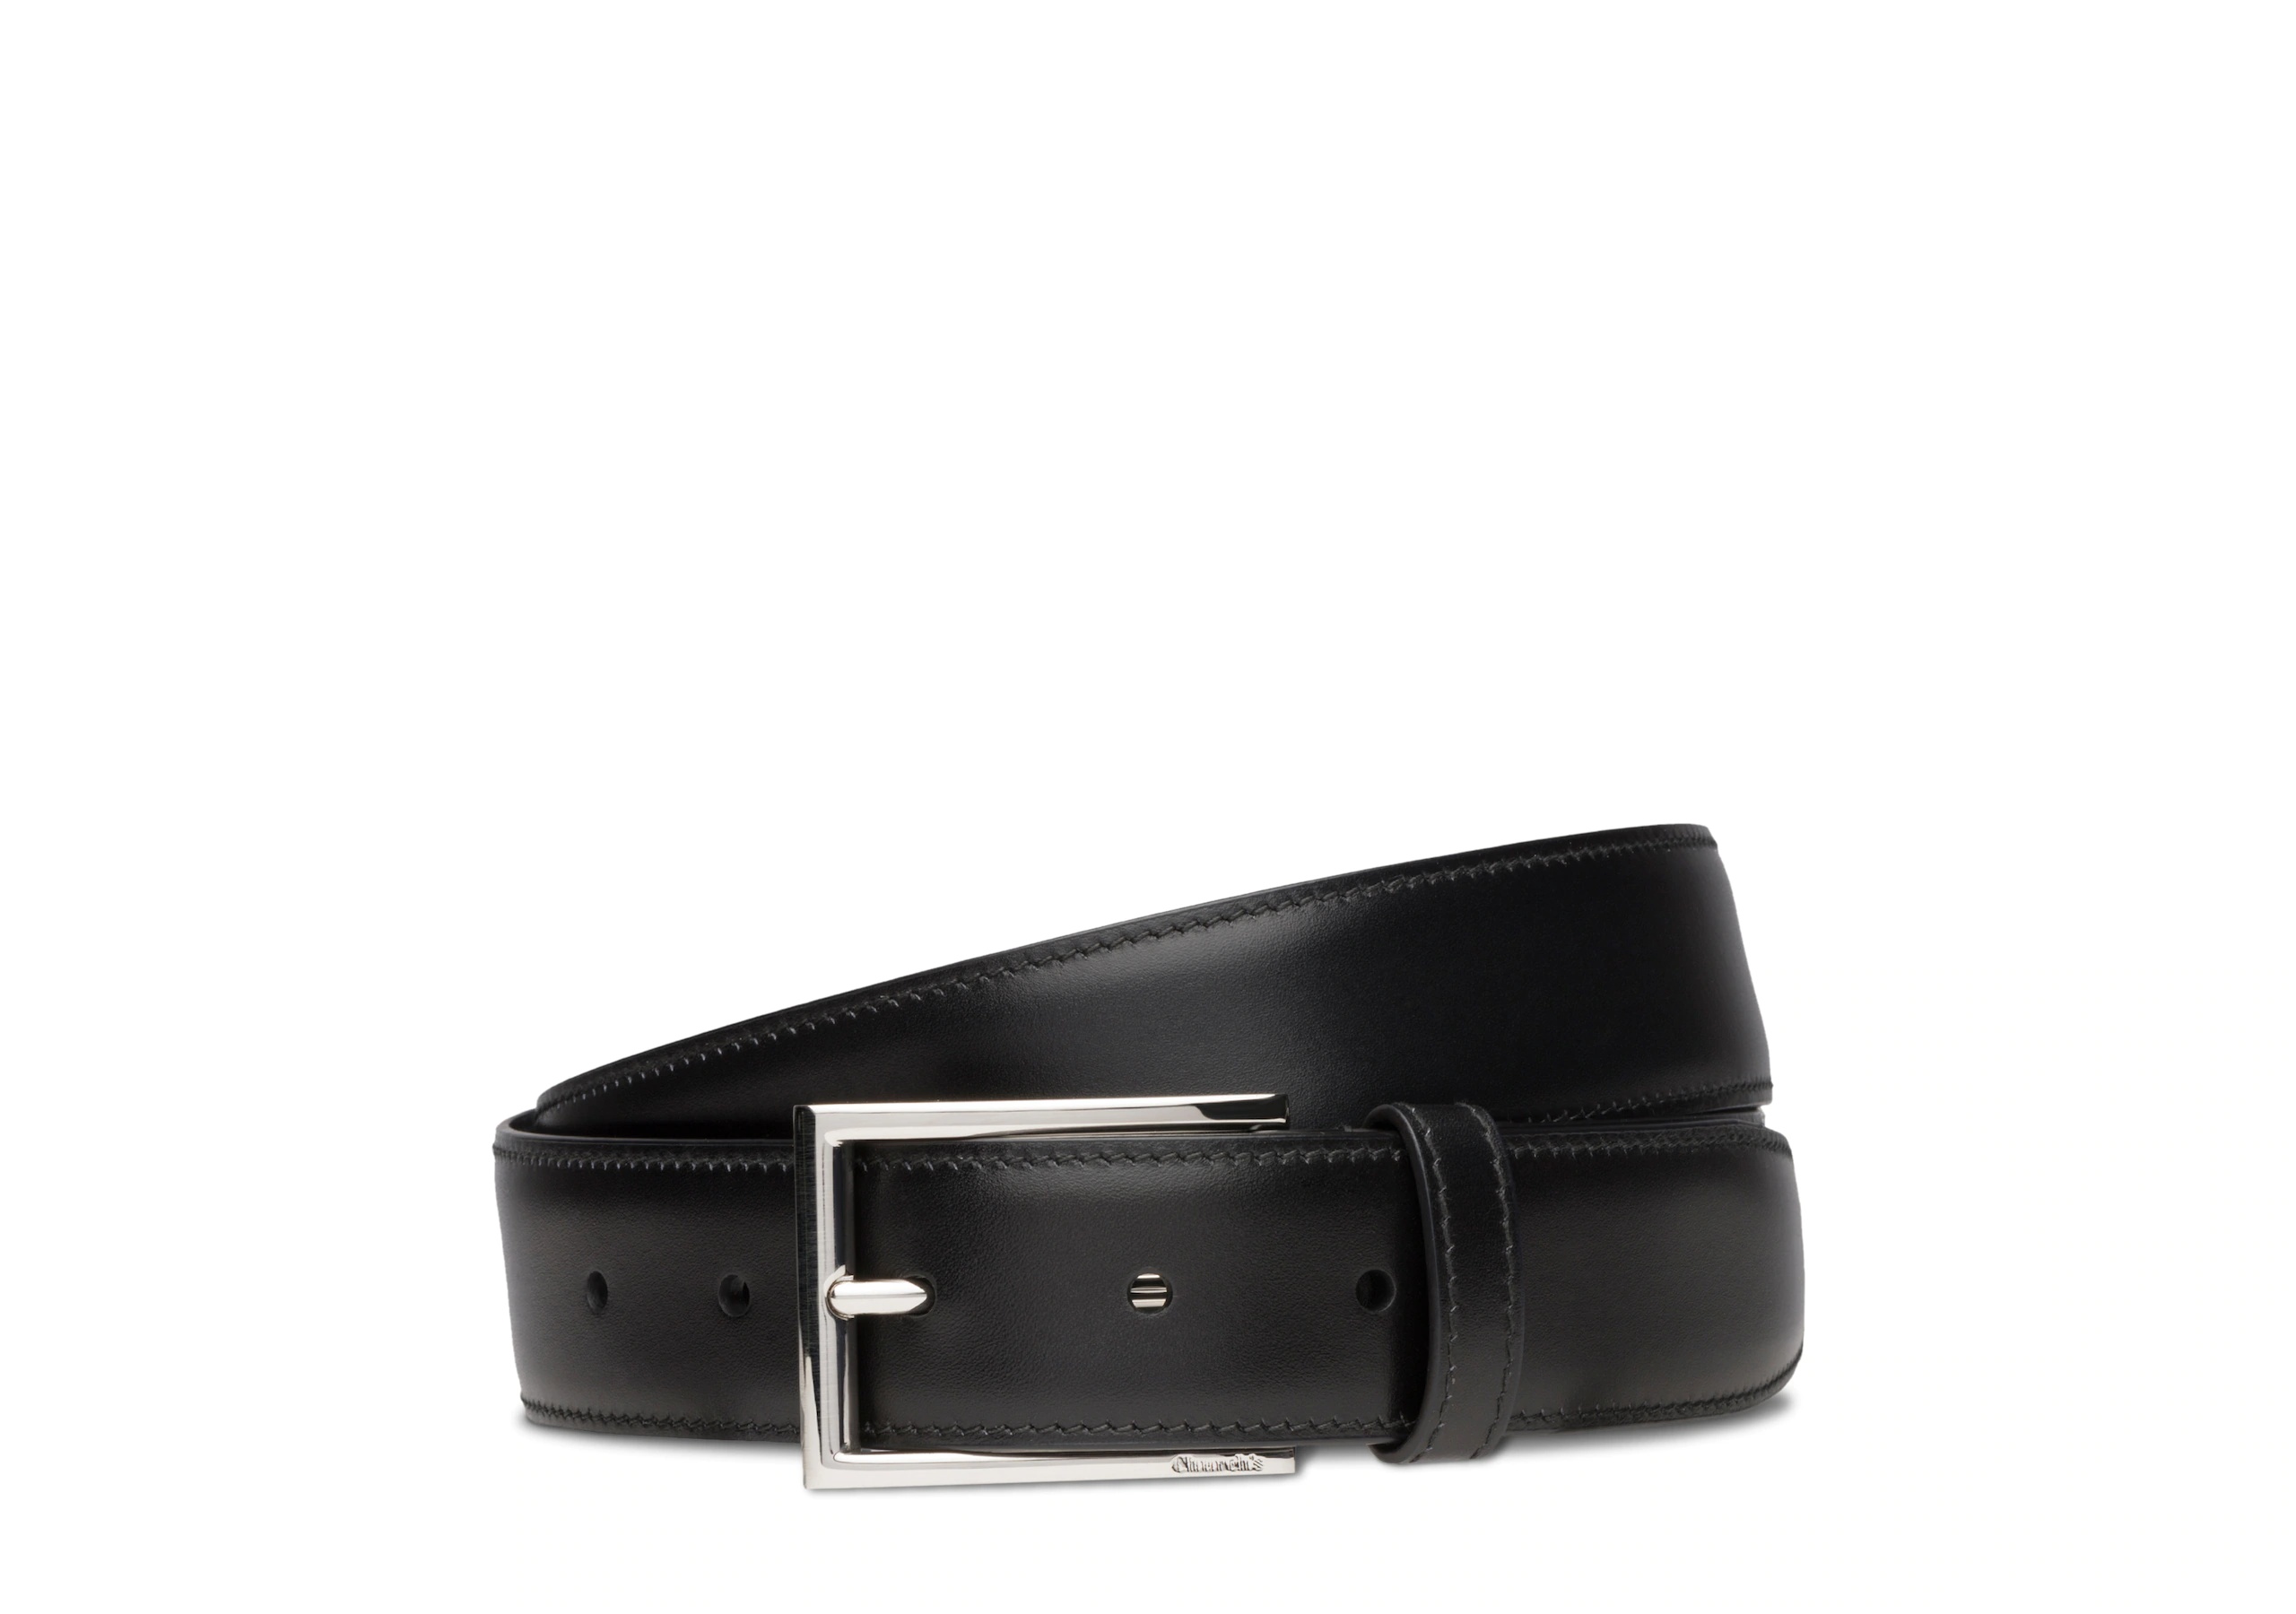 Elongated buckle belt
Calf Leather Belt Black - 1